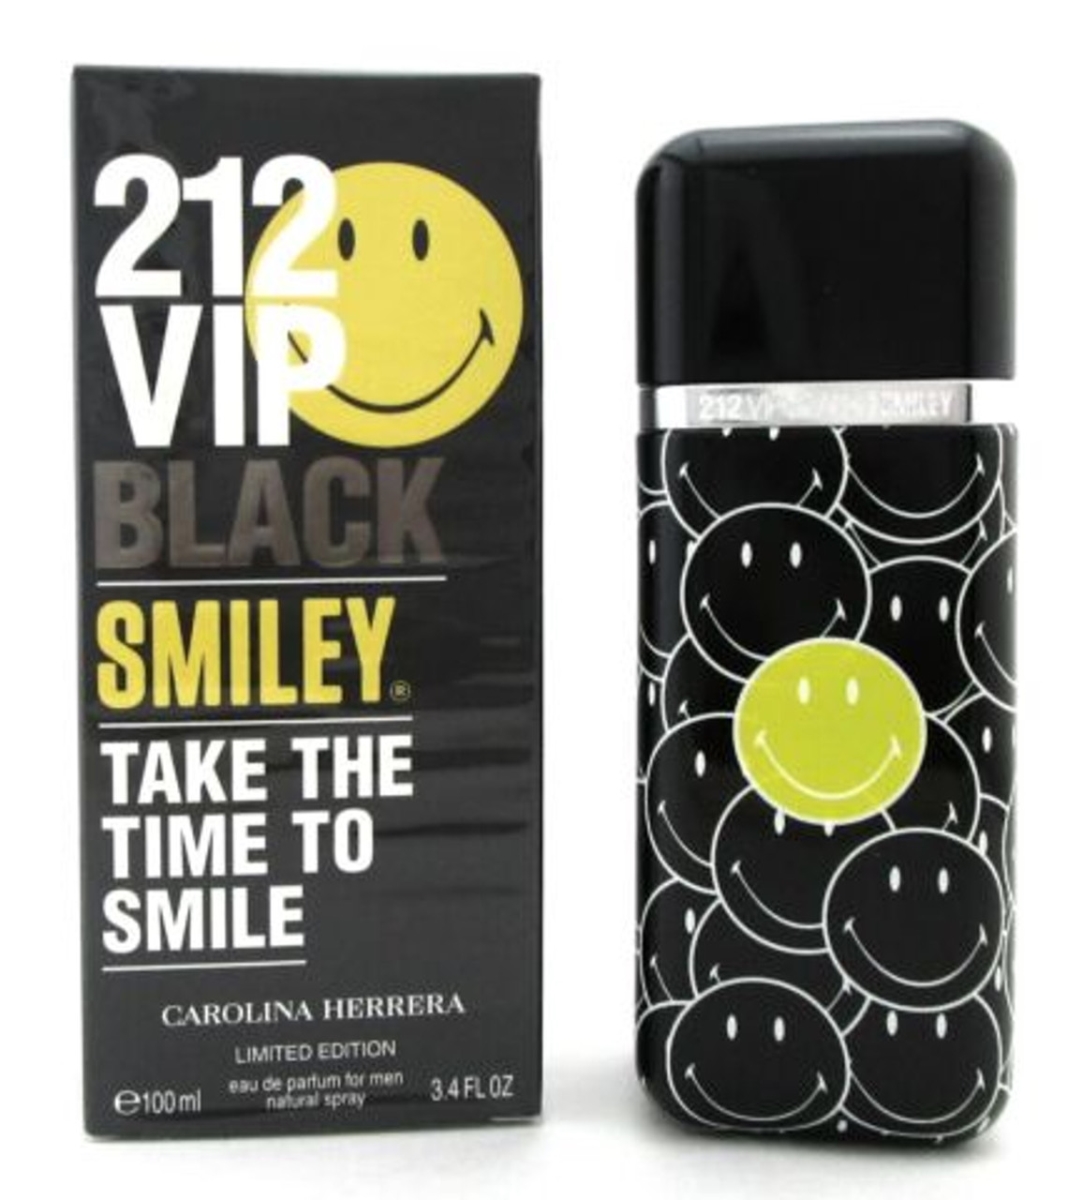 Picture of Carolina Herrera 12443 212 VIP BLACK SMILEY by Carolina Herrera 3.4 oz. EDP Spray Men. New Sealed Box